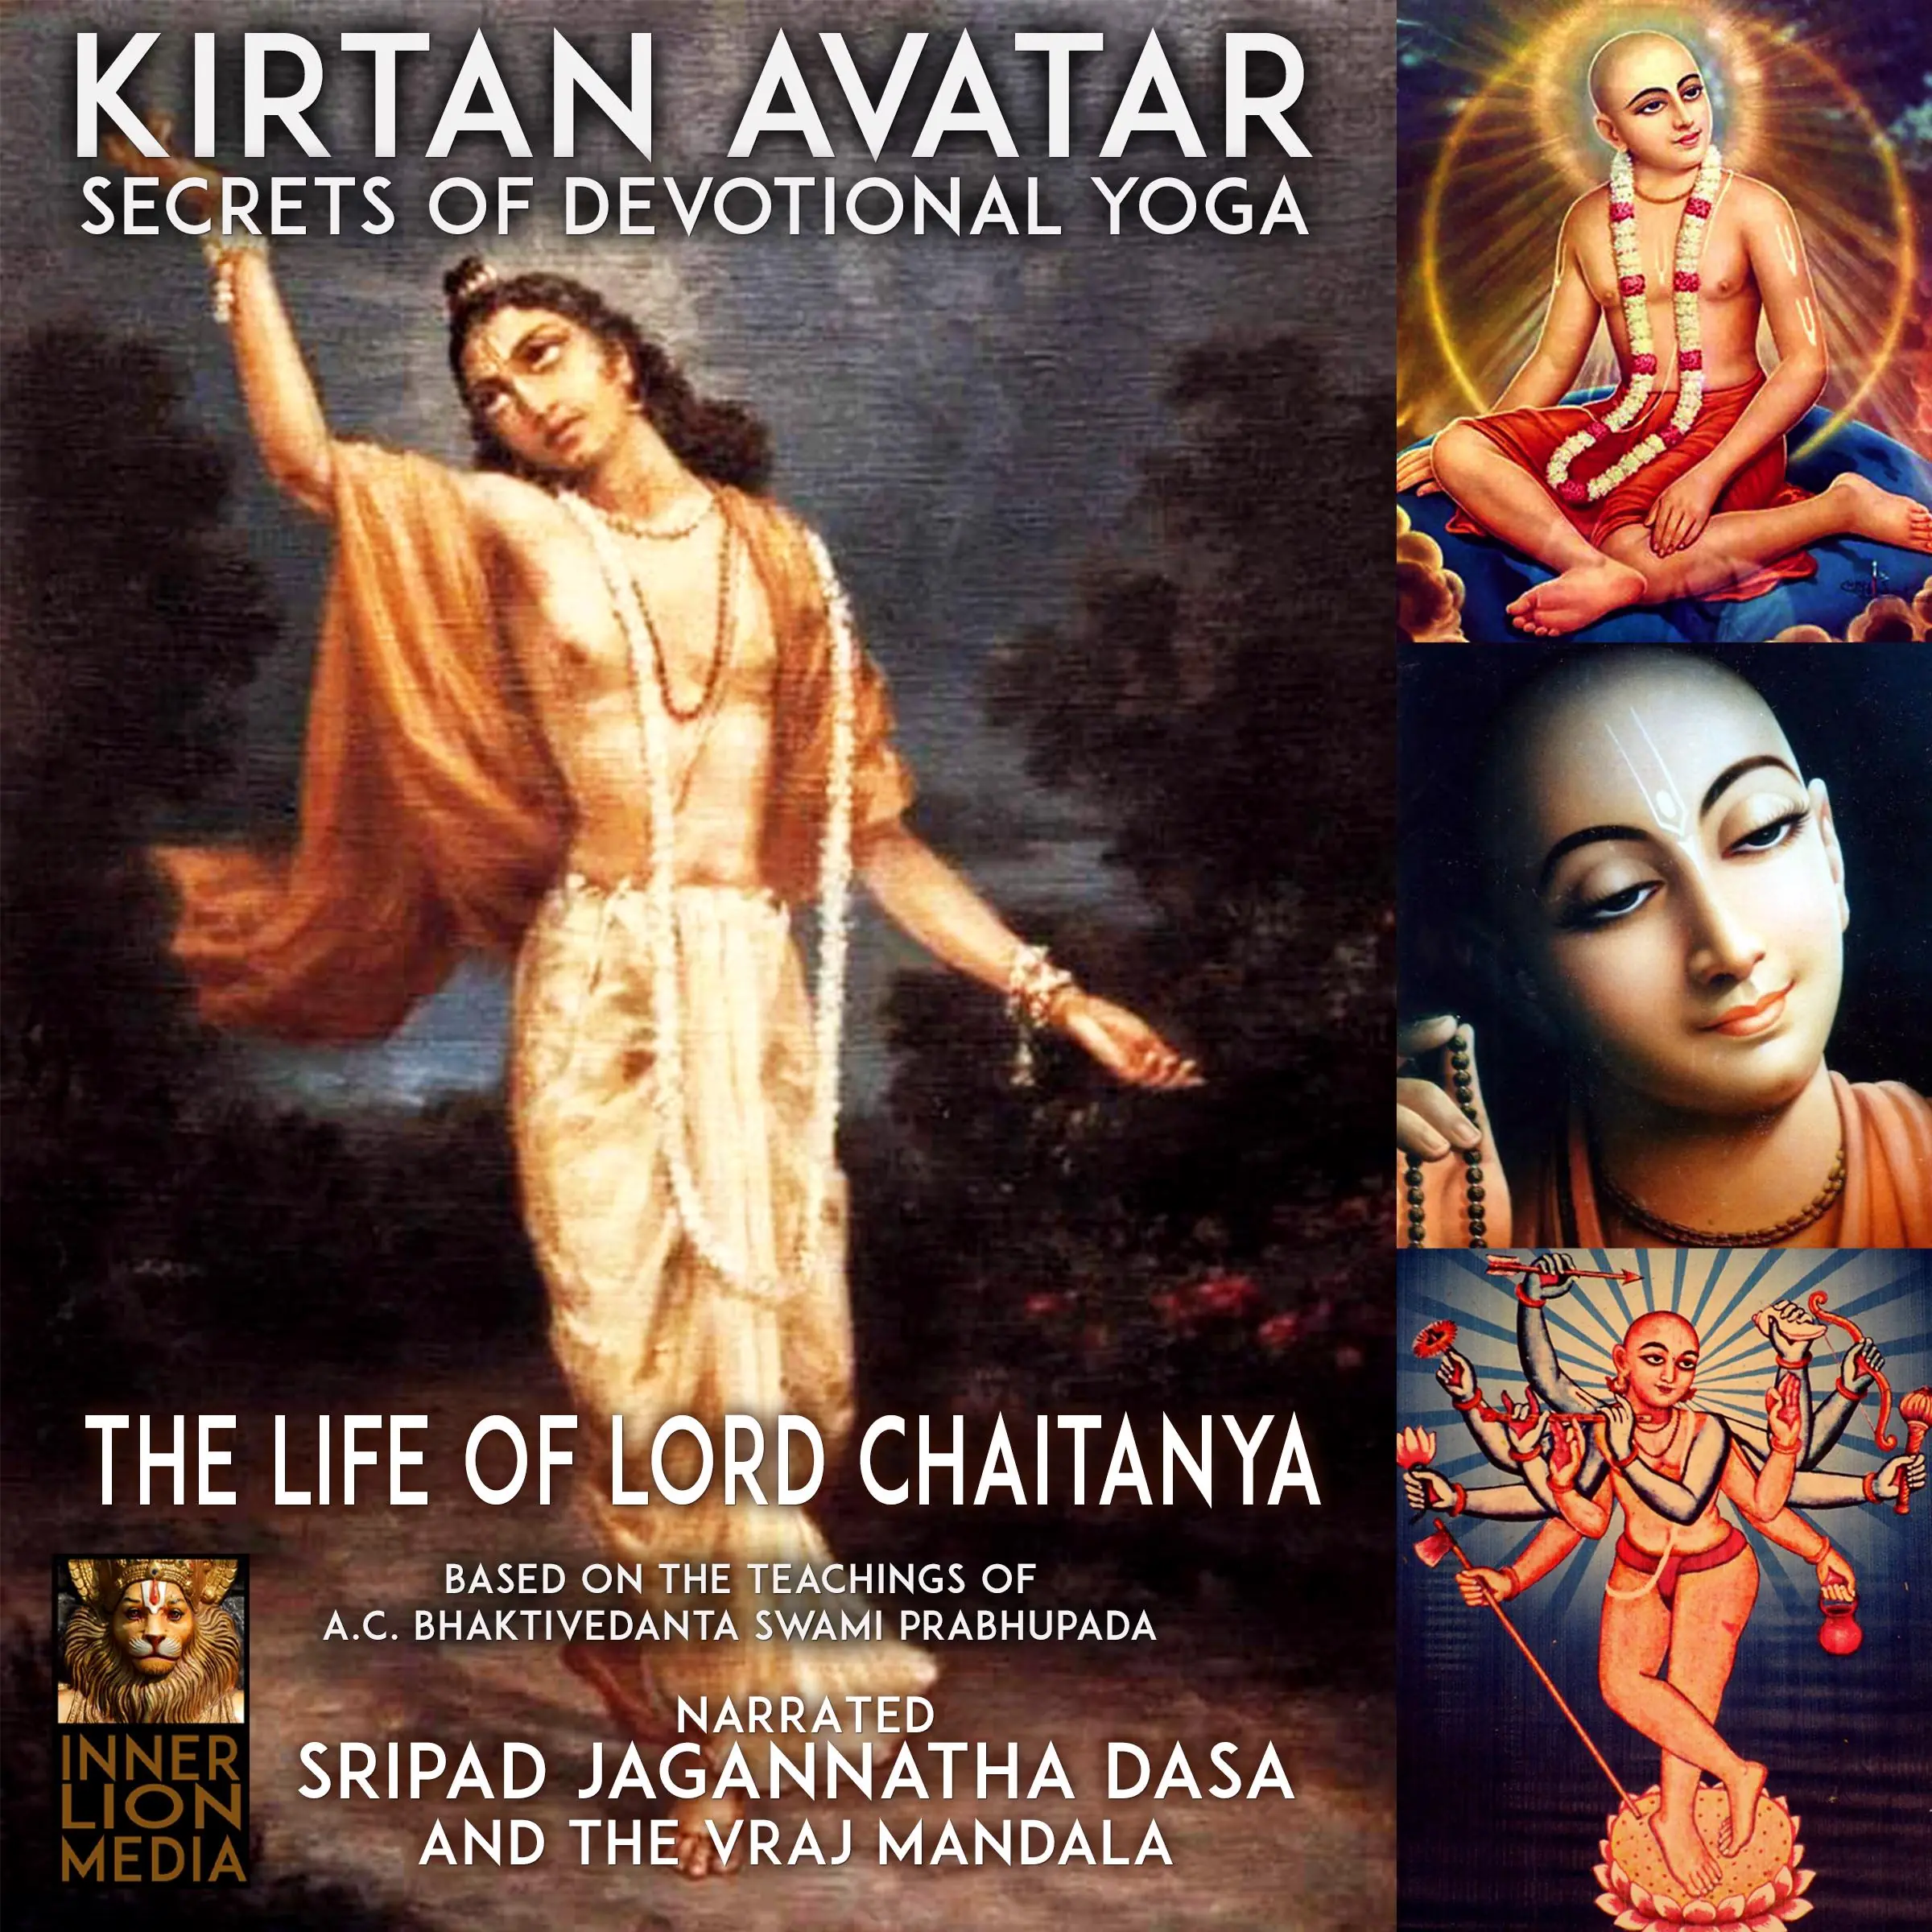 Kirtan Avatar The Life Of Lord Chaitanya Secrets Of Devotional Yoga Audiobook by A.C. Bhaktivedanta Swami Prabhupada